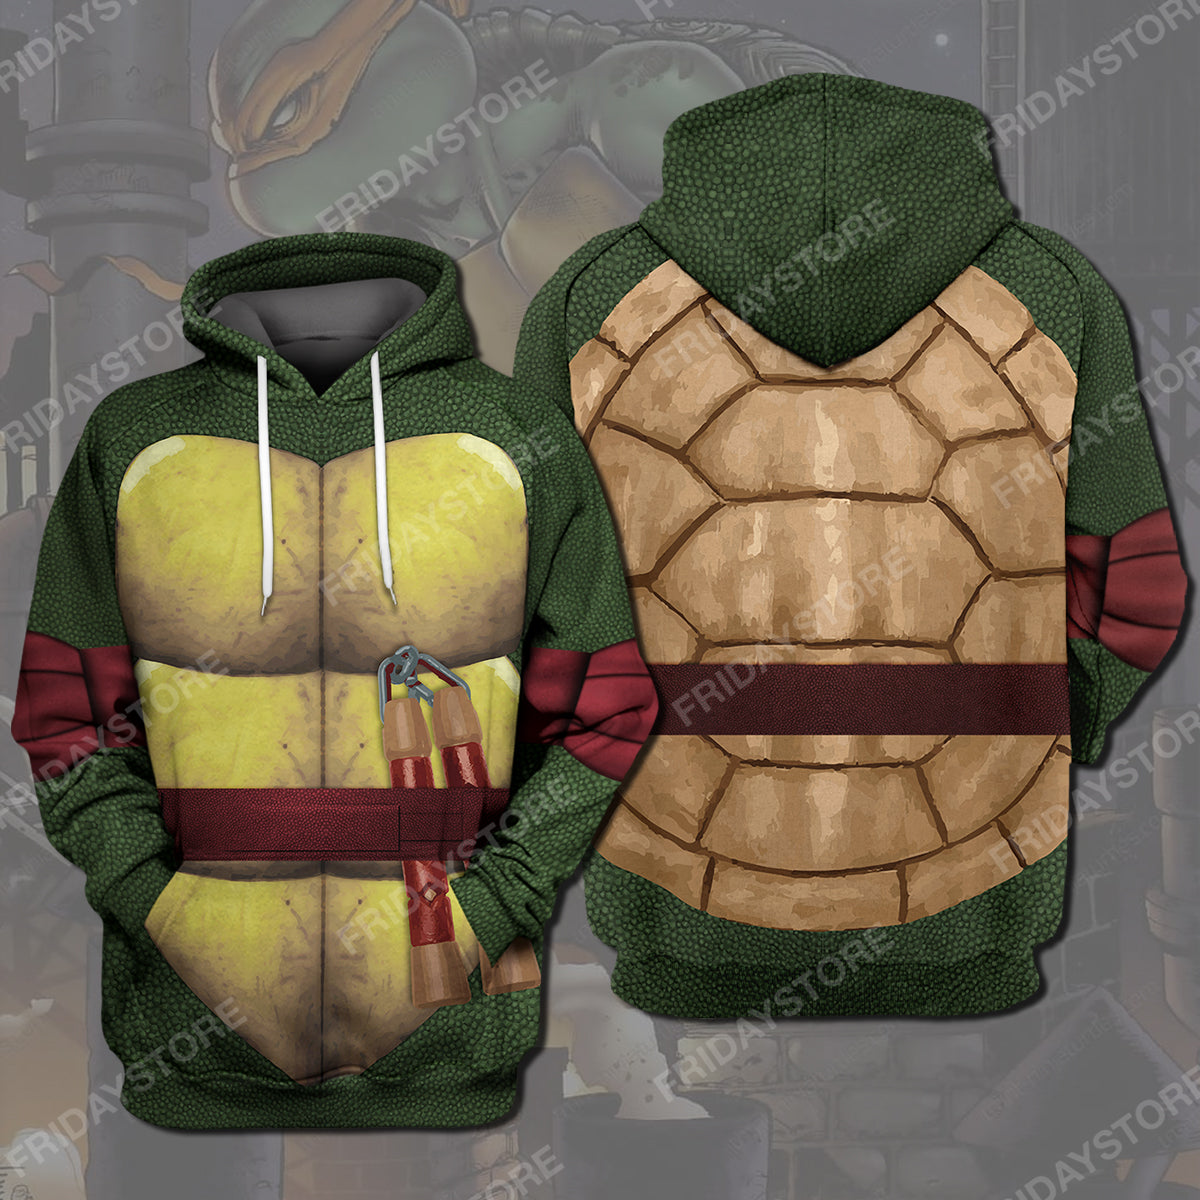 Unifinz TMNT Hoodie Michael Ninja Turtles Costume T-shirt TMNT Shirt Sweater Tank Cool TMNT Cosplay Costume Apparel 2022